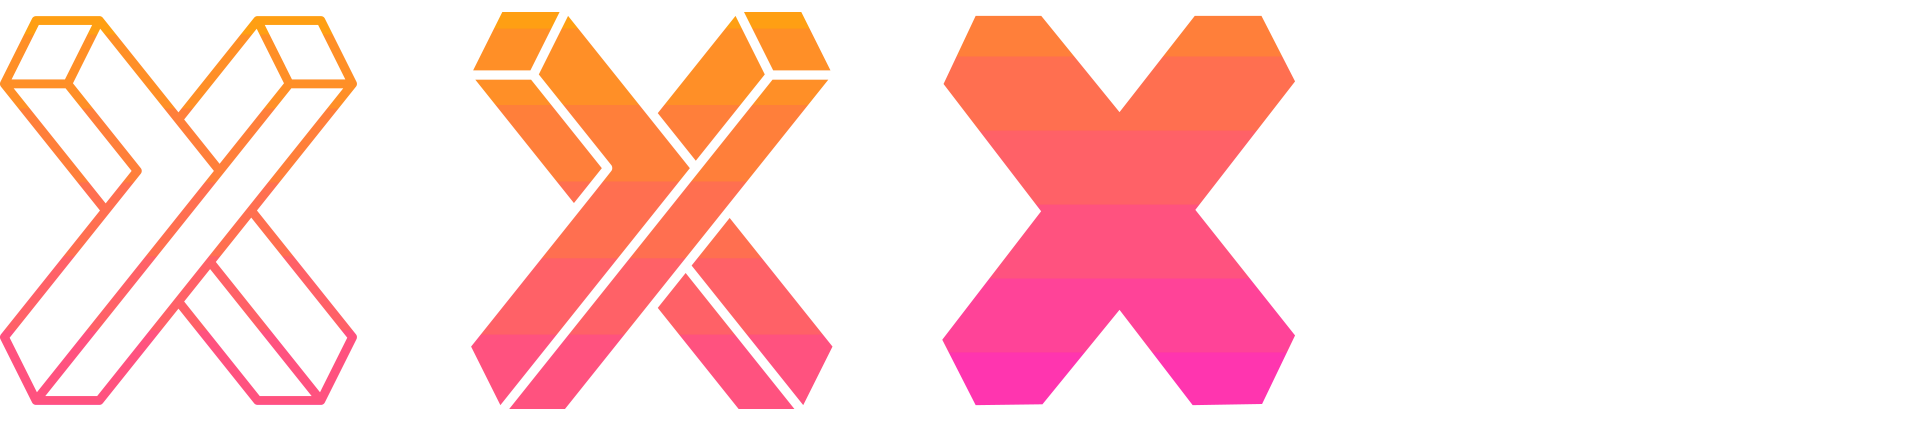 xCoAx 2022 logo variations.